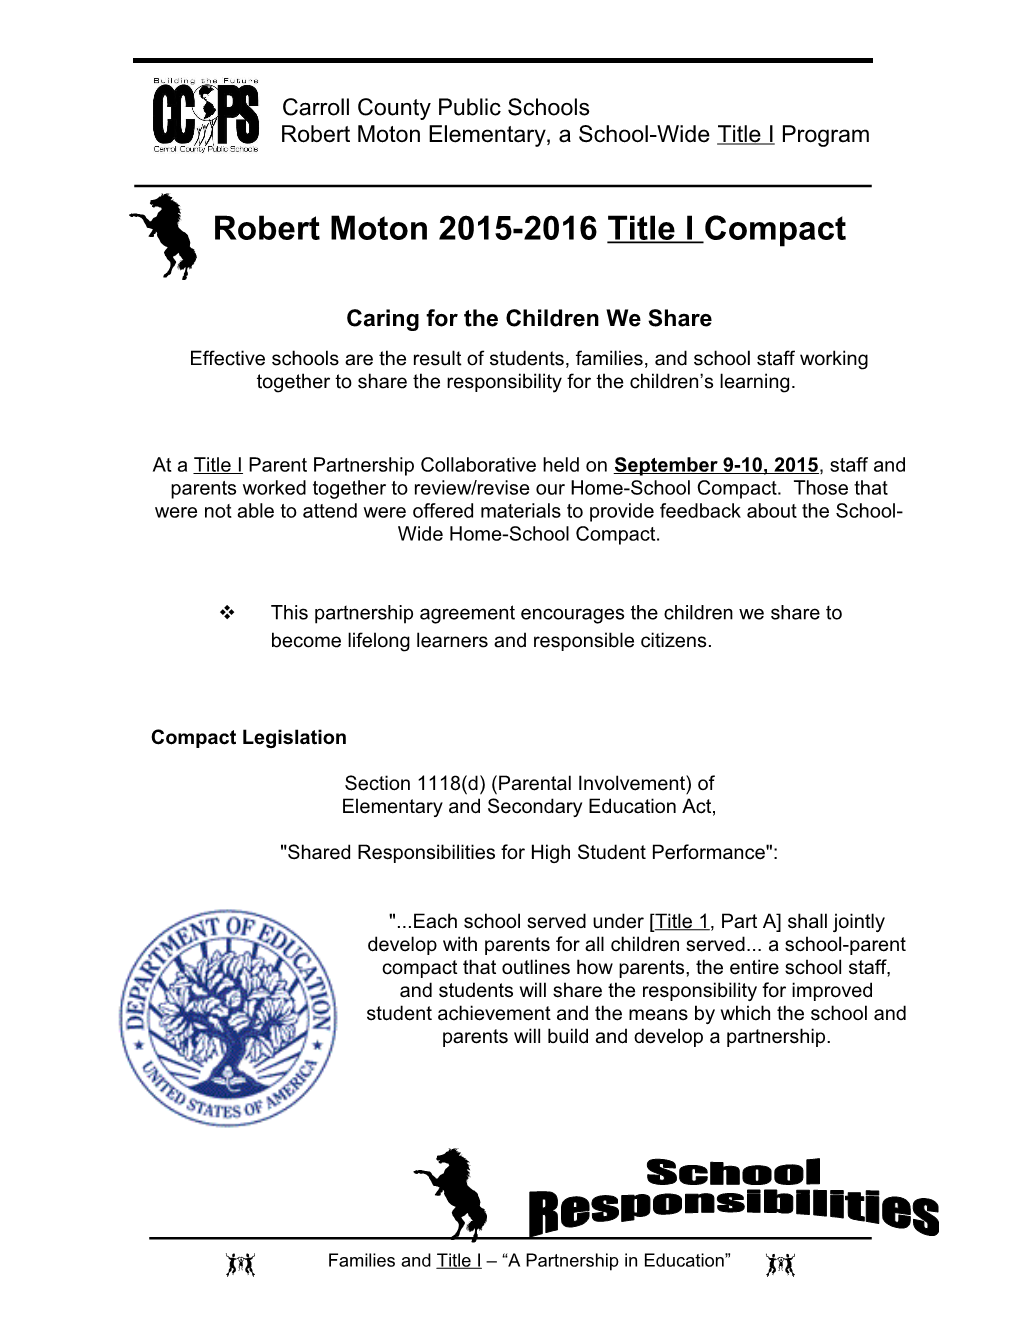 Robert Moton Elementary, a School-Wide Title I Program